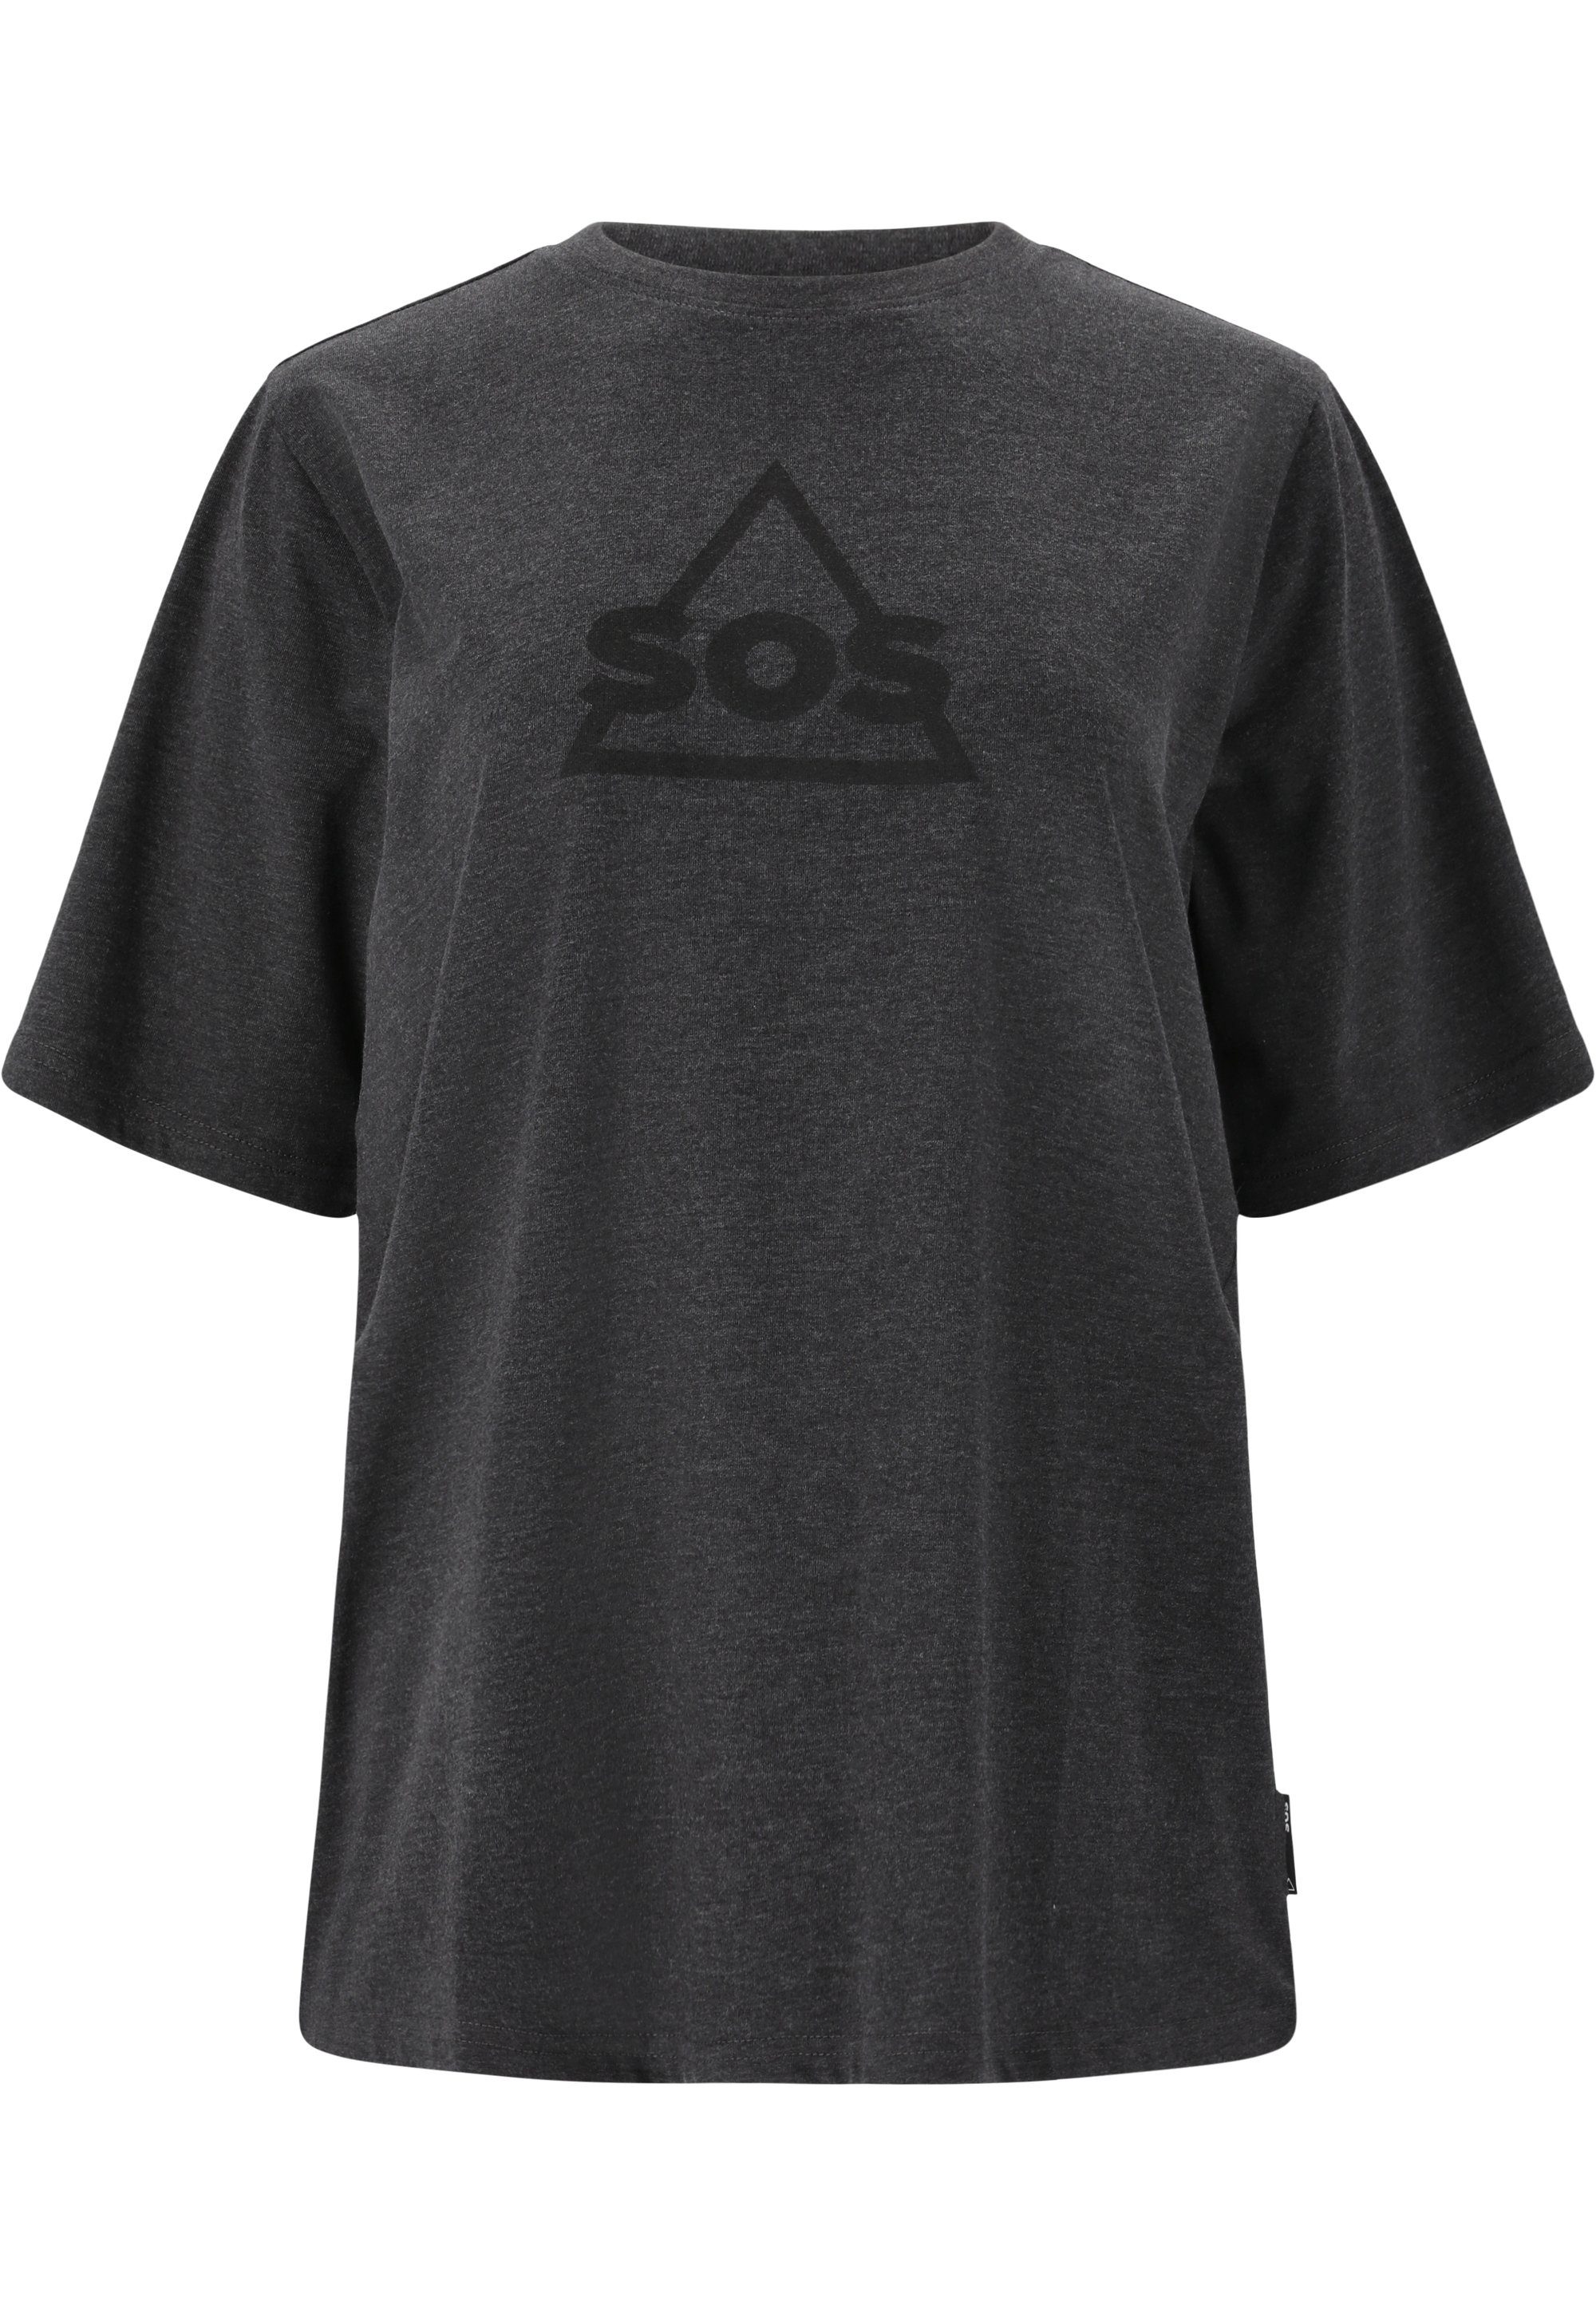 Kvitfjell trendigem Markenlogo mit Front Funktionsshirt auf SOS der dunkelgrau